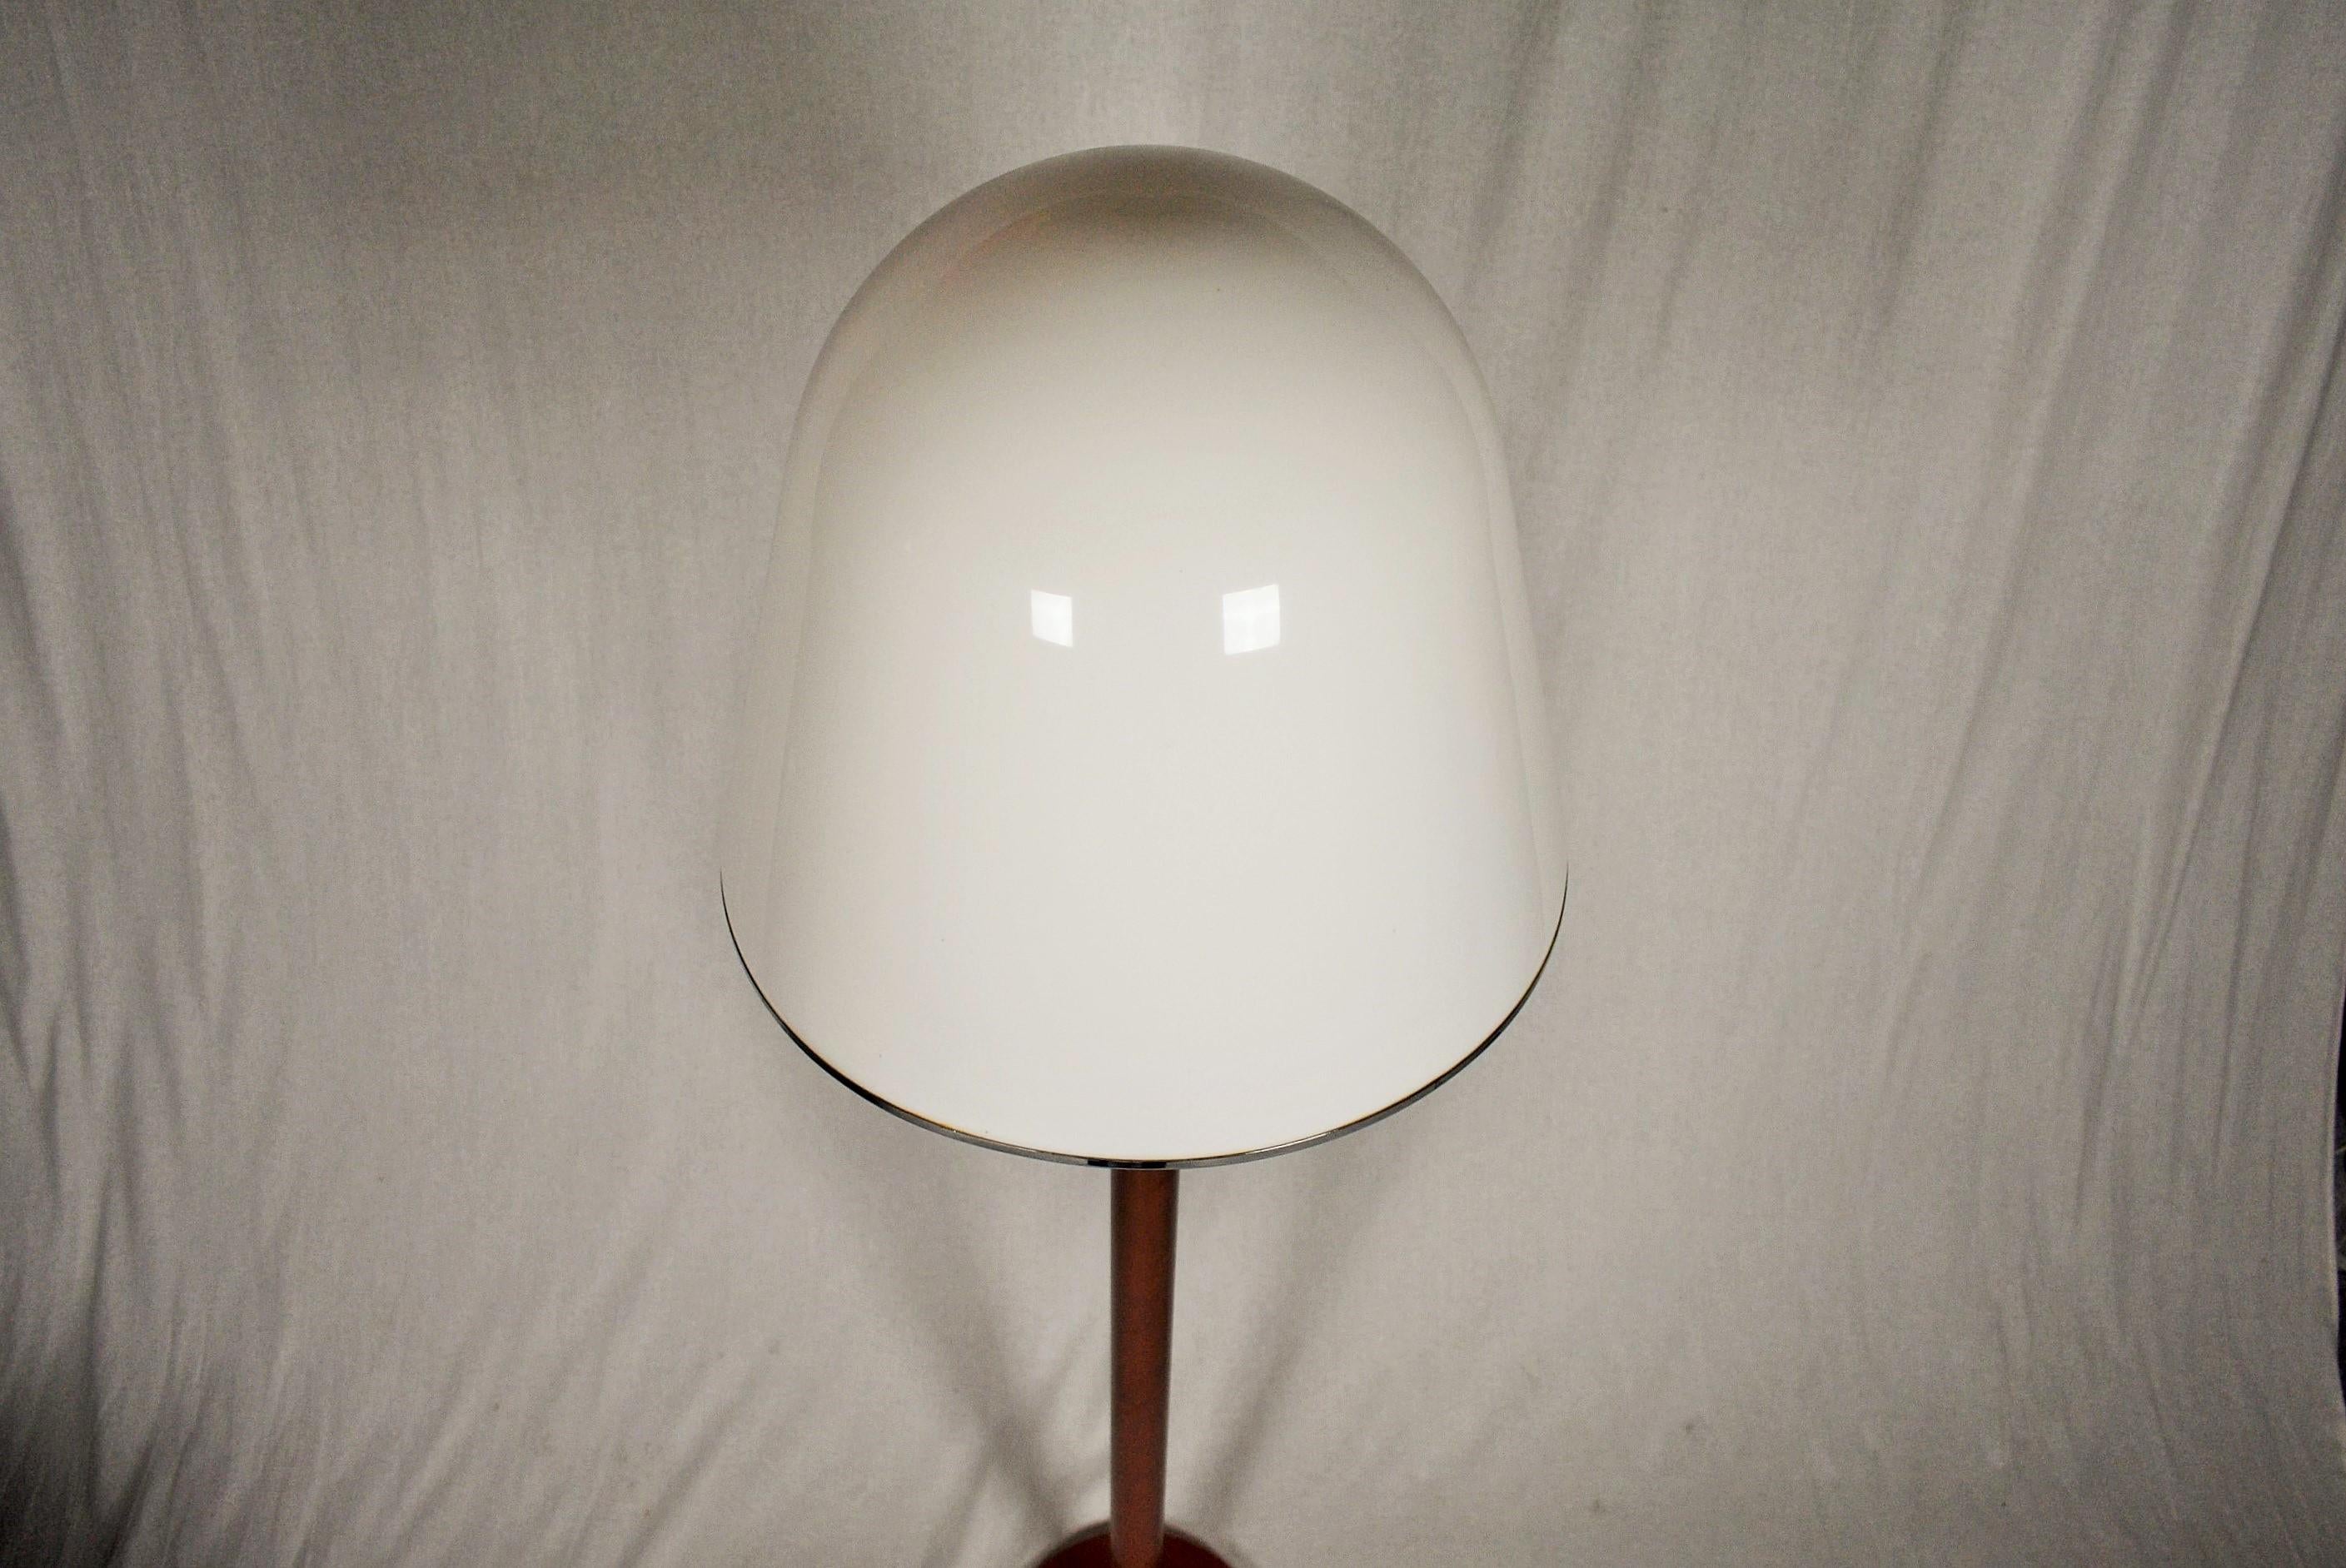 A rare model of Guzzini-Meblo floor lamp 'kuala' produced in the 1970s and early 1980s
Design by Franco Bresciani.